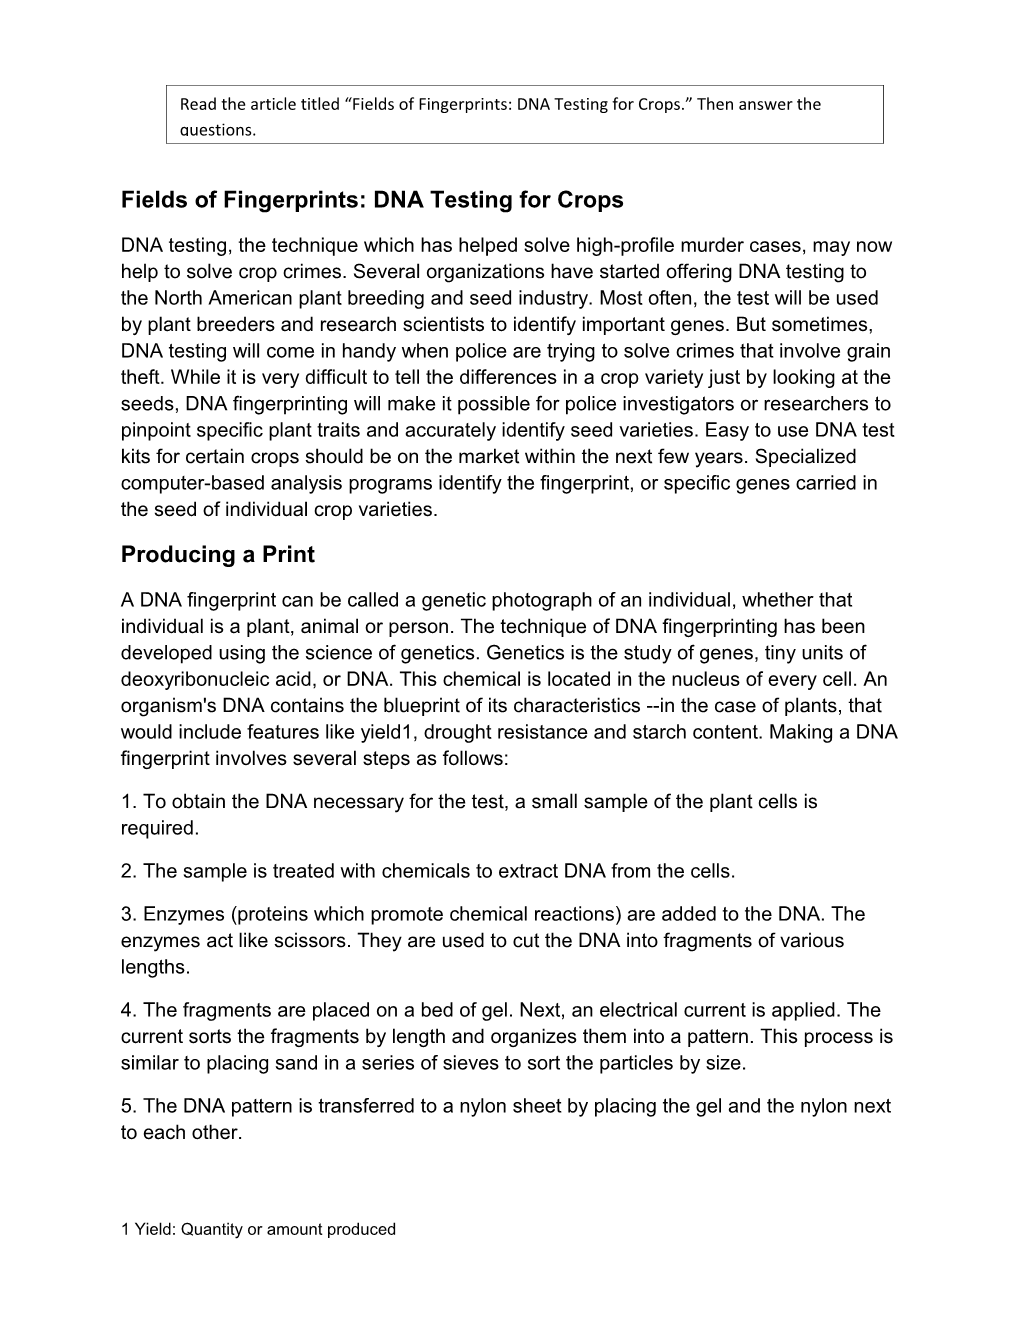 Fields of Fingerprints: DNA Testing for Crops